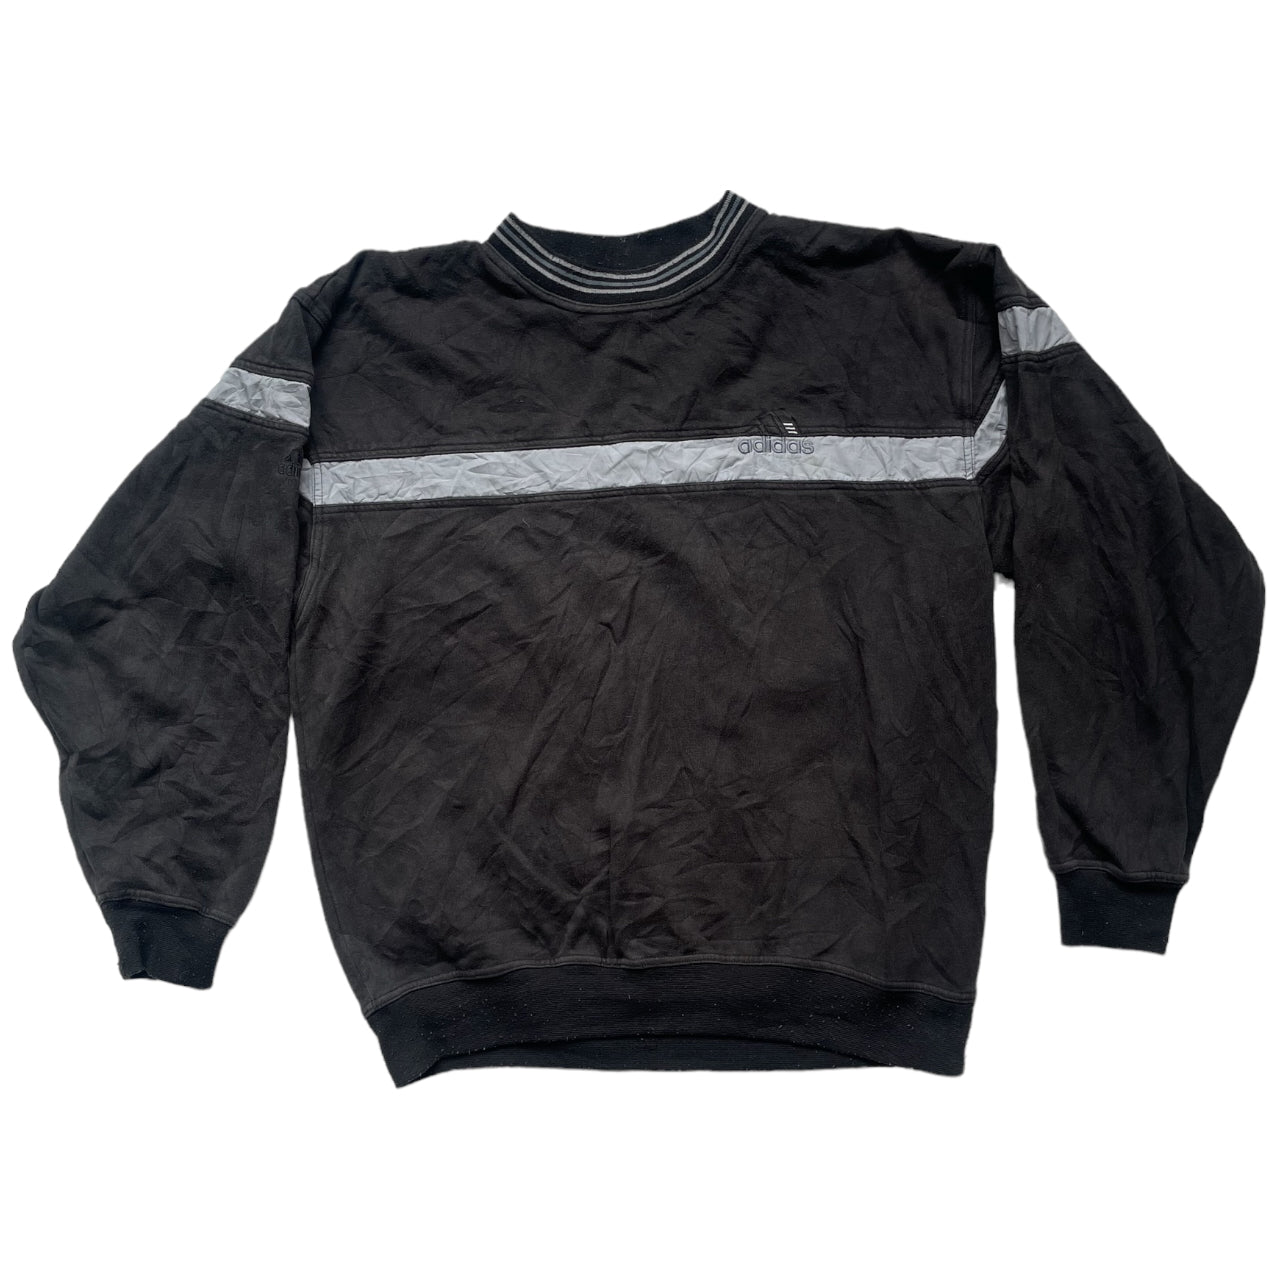 Vintage Adidas Sweatshirt Crew Neck Retro L Size Black A_36